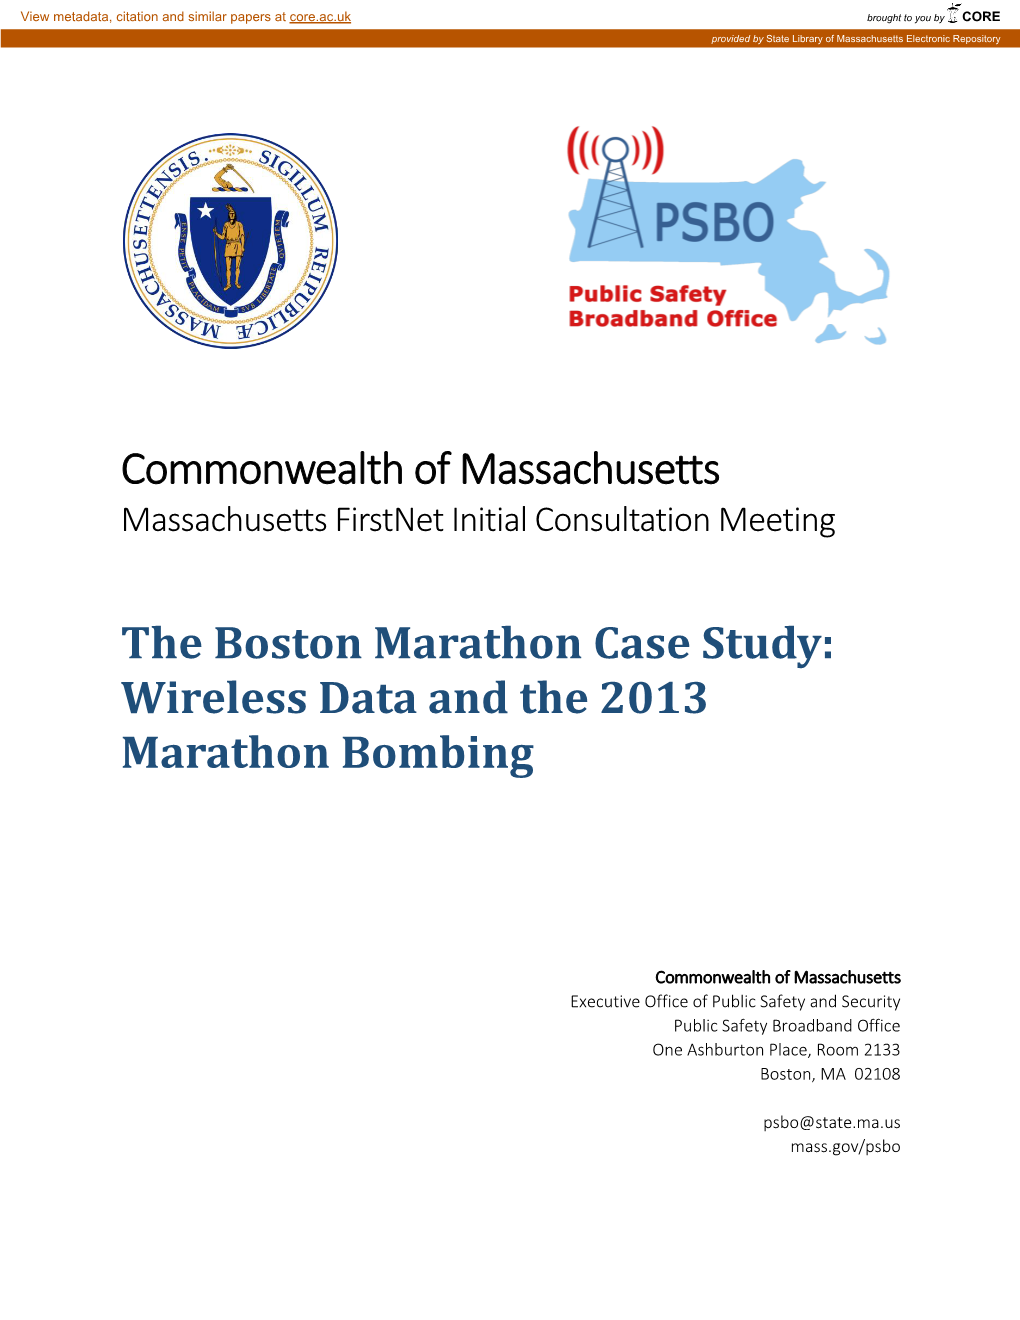 Wireless Data and the 2013 Marathon Bombing